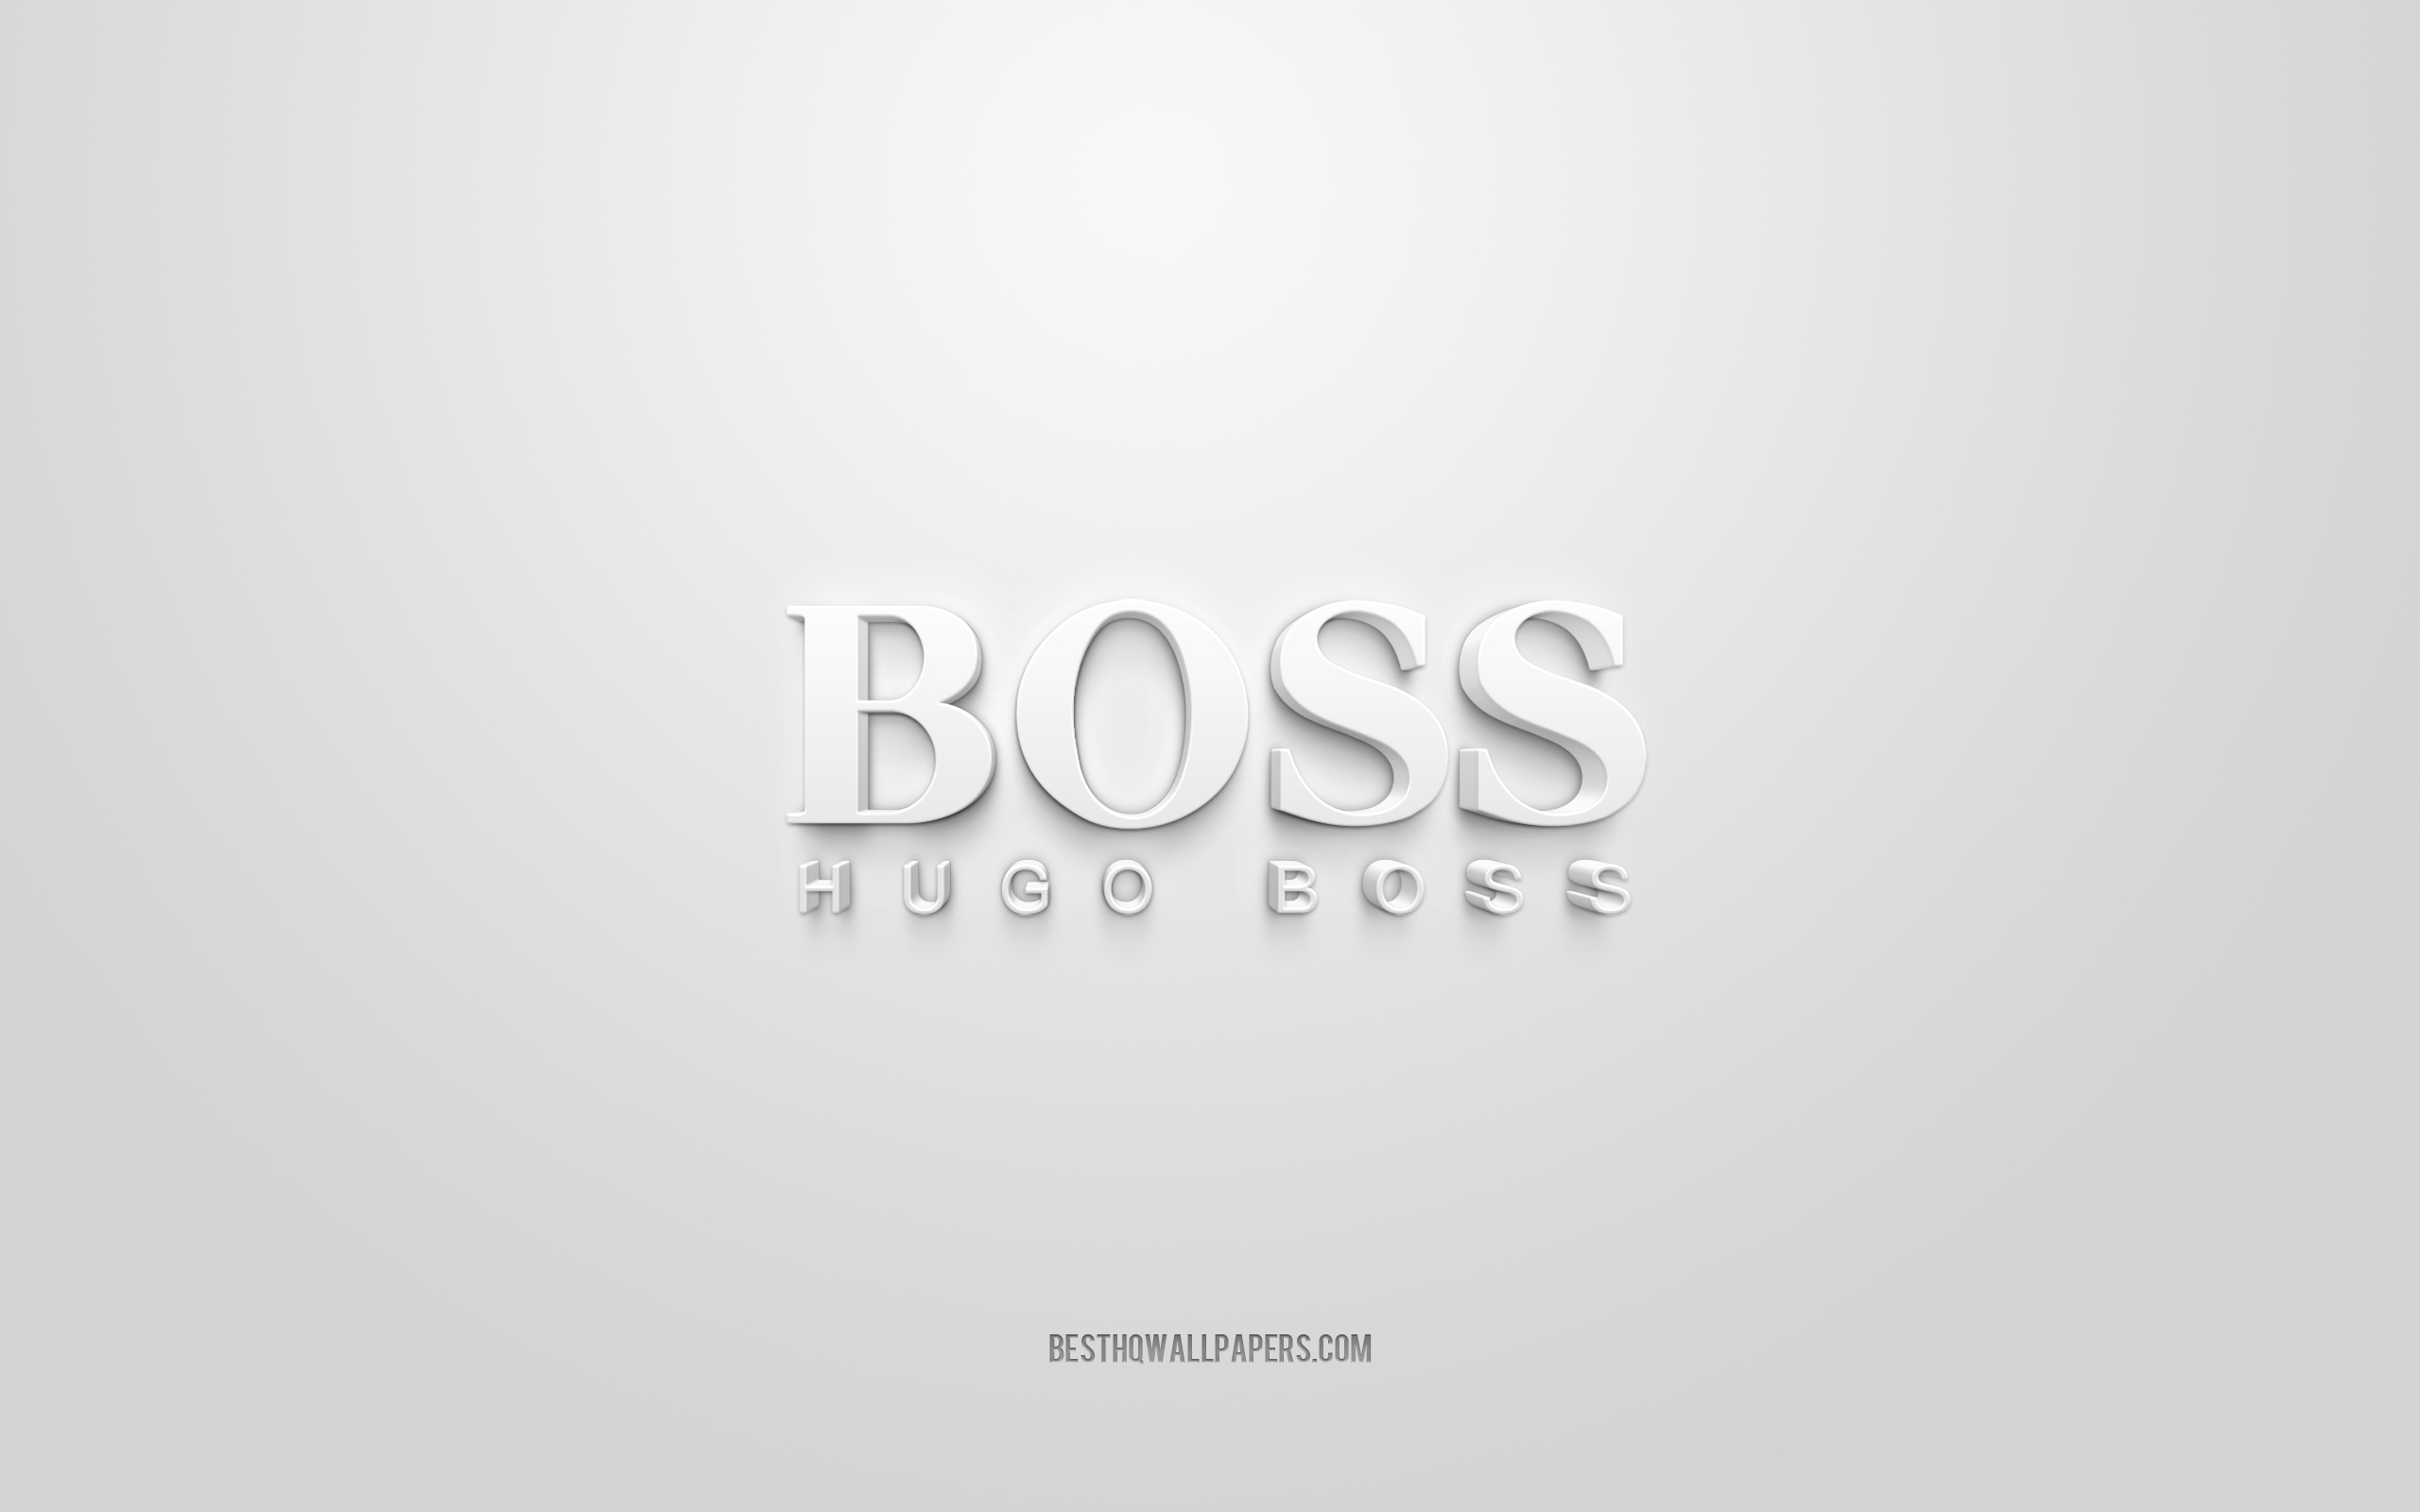 Download wallpaper Hugo Boss logo, white background, Hugo Boss 3D logo, 3D art, Hugo Boss, brands logo, white 3D Hugo Boss logo for desktop with resolution 2560x1600. High Quality HD picture wallpaper